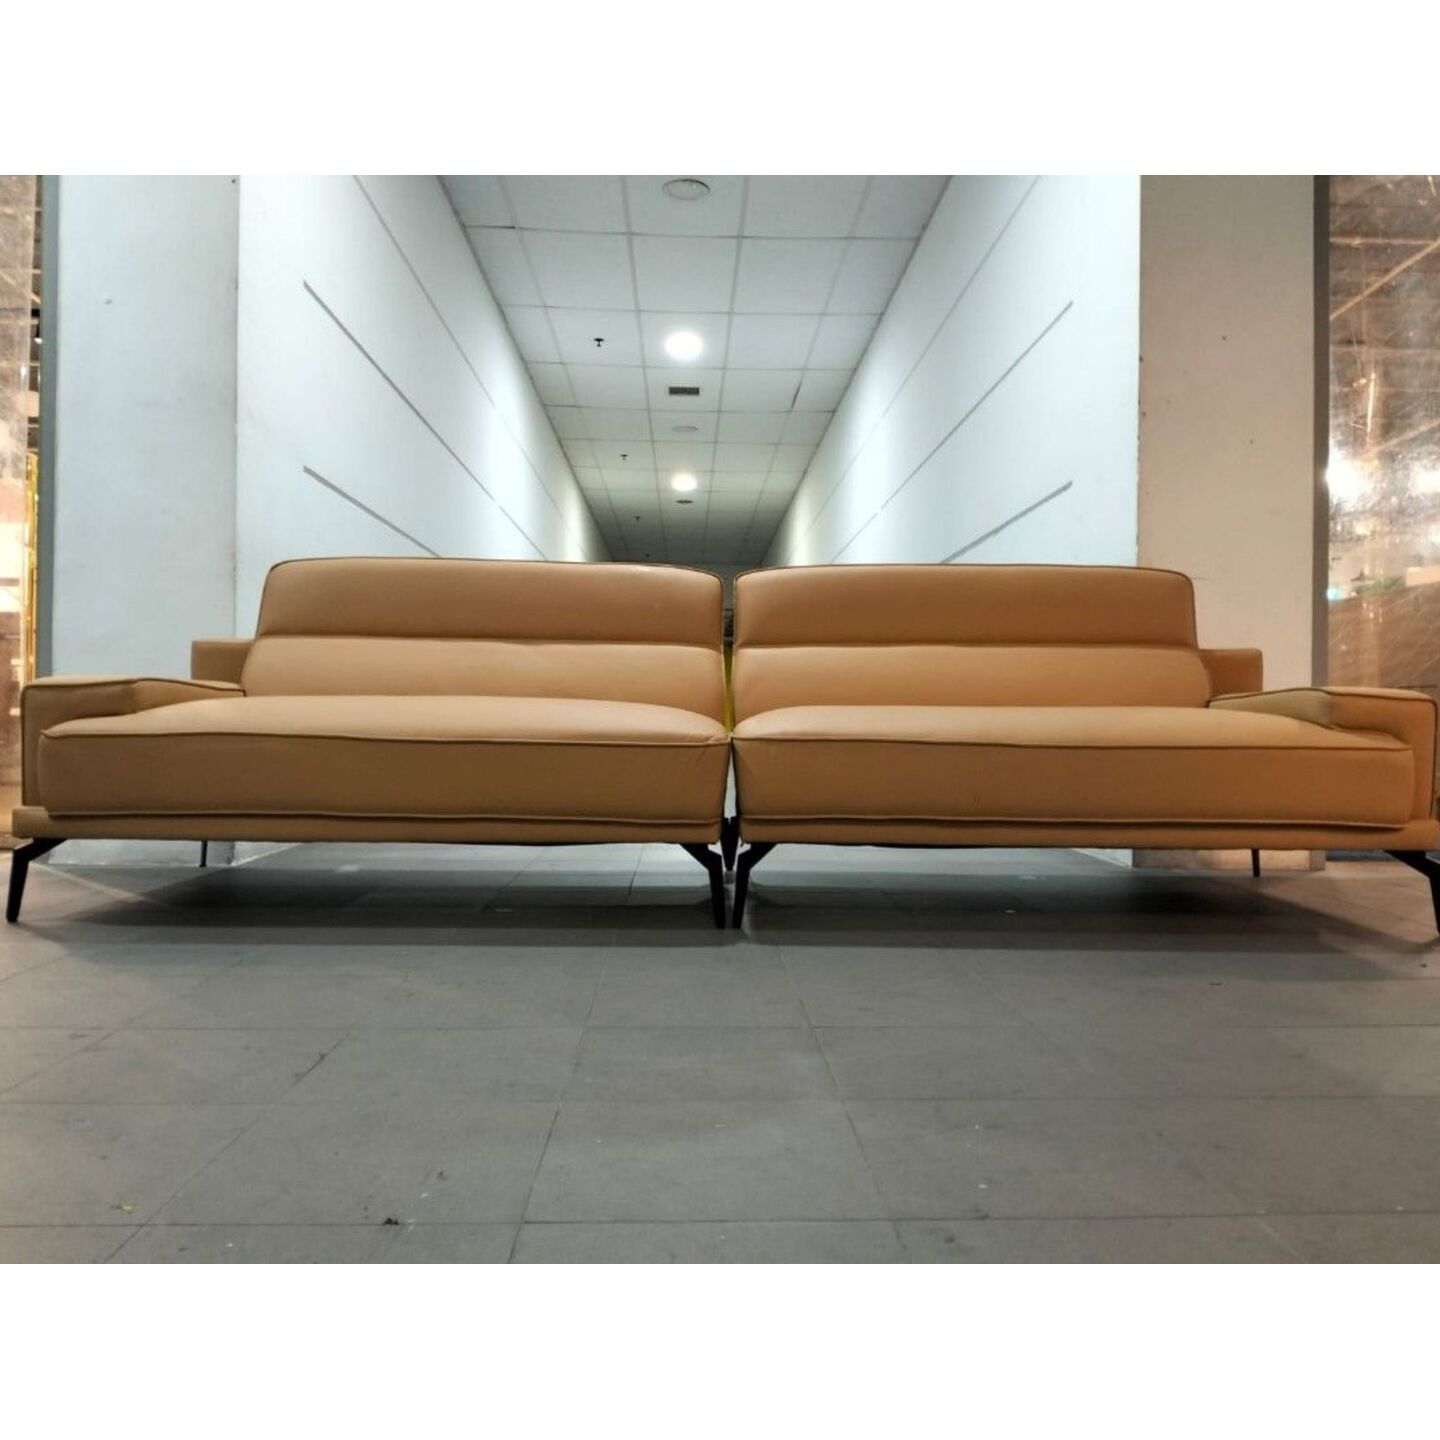 DEBEZIUM 4 Seater Sofa in ITALIAN NAPPA Leather